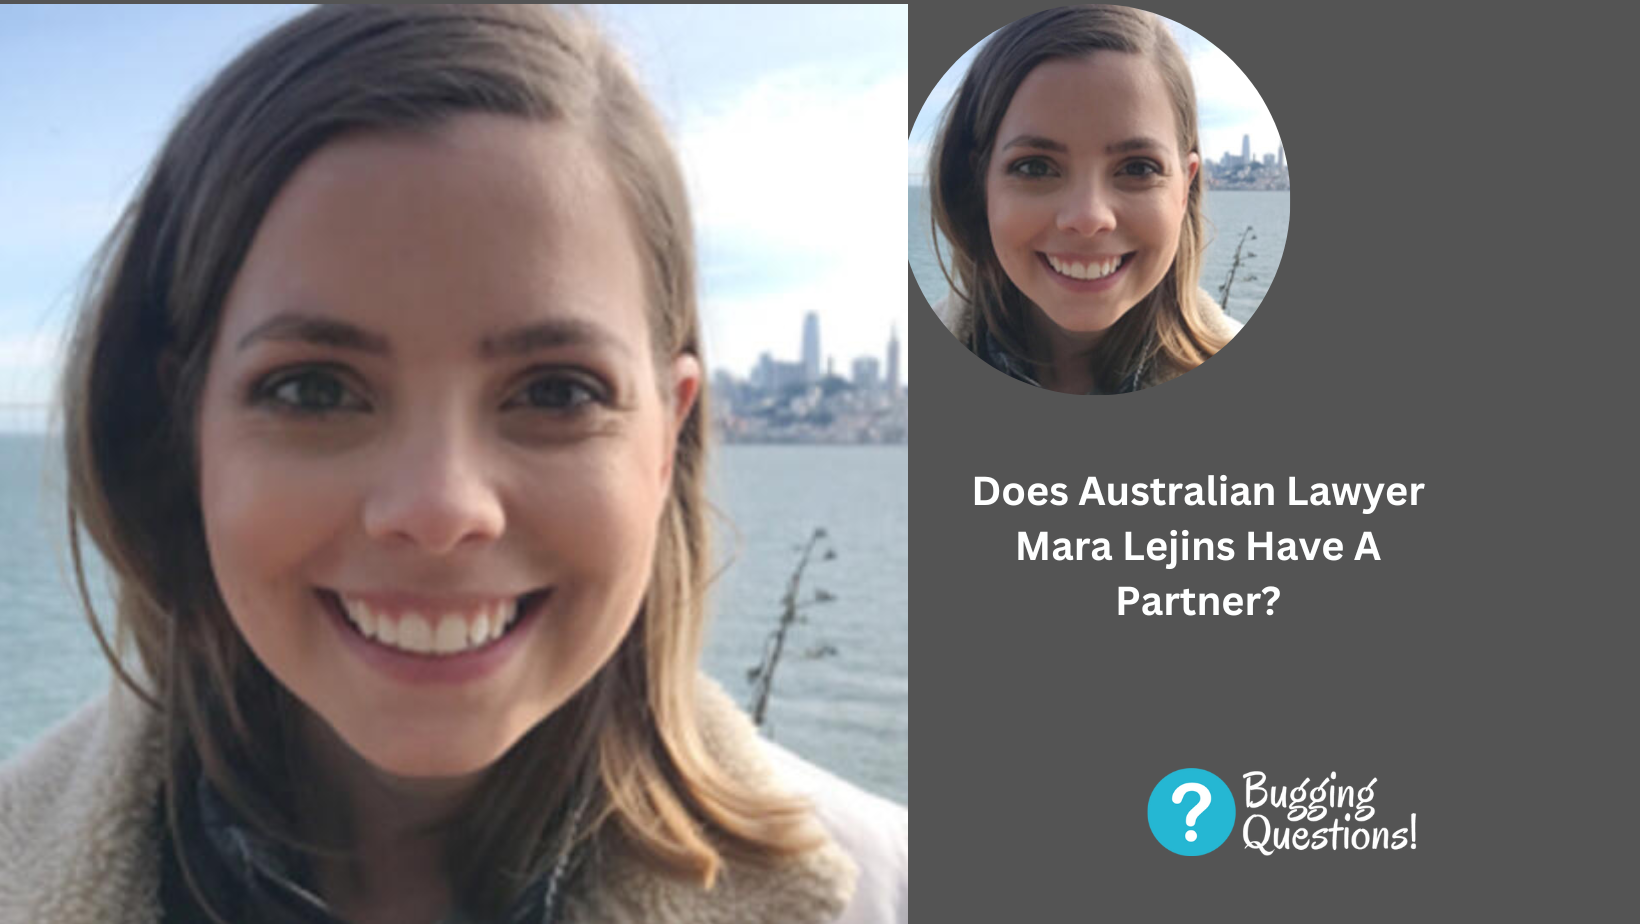 Does Australian Lawyer Mara Lejins Have A Partner?